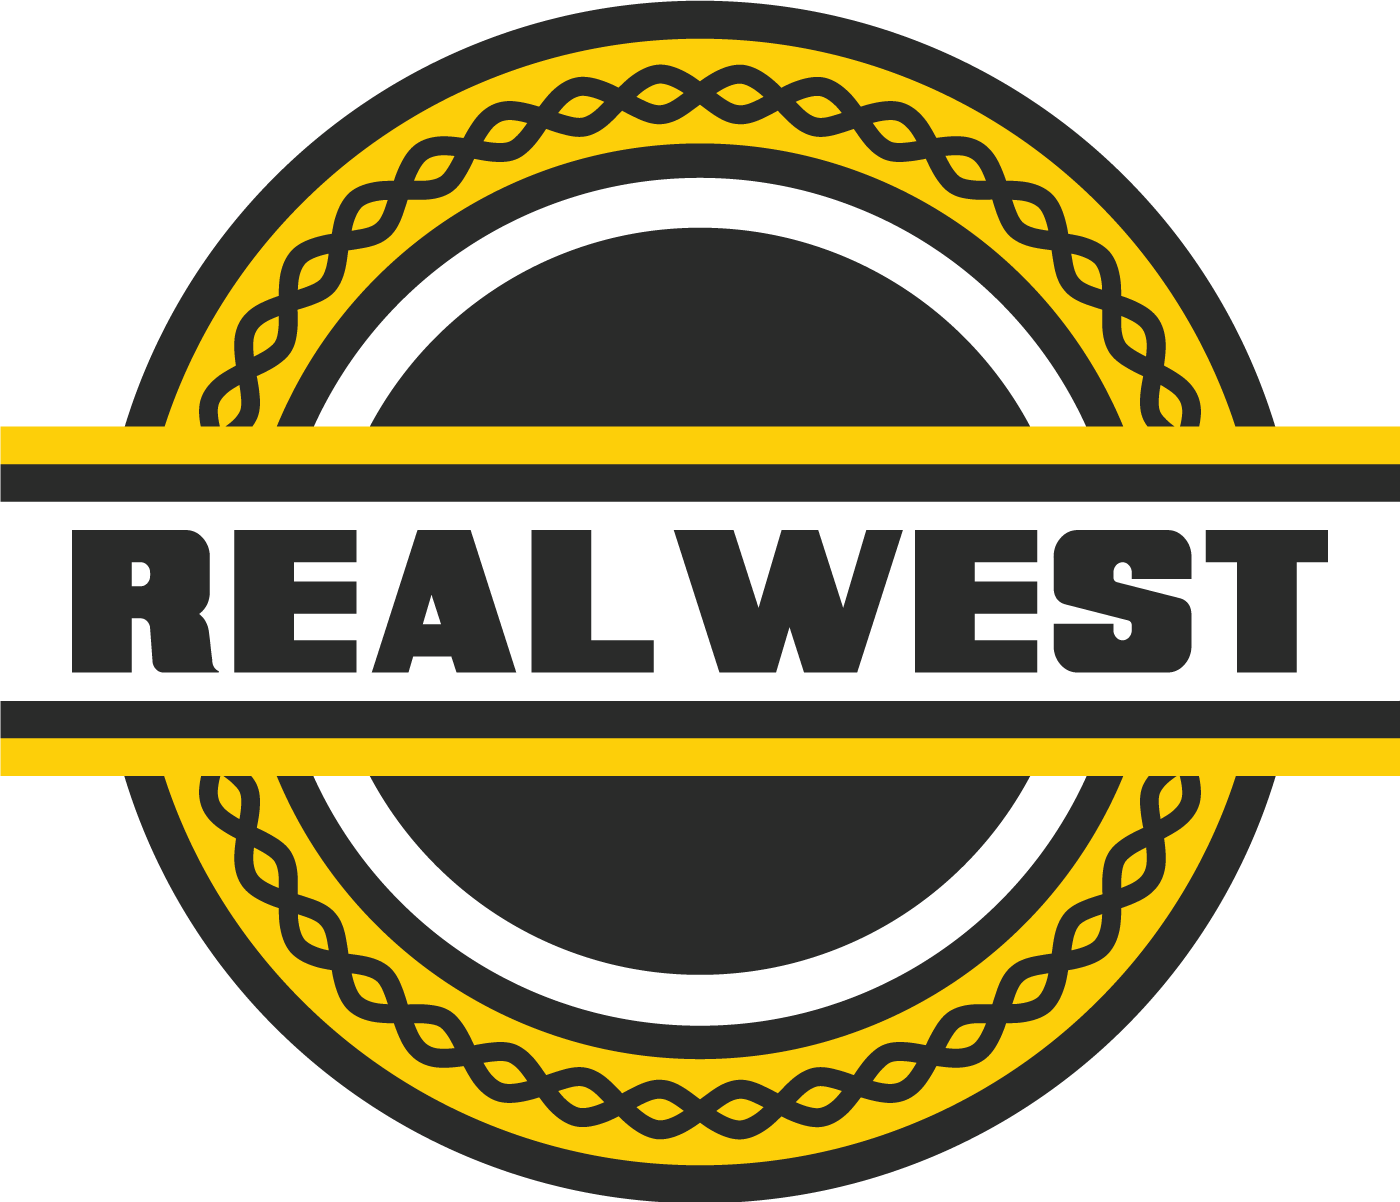 Real West Team Sponsorships